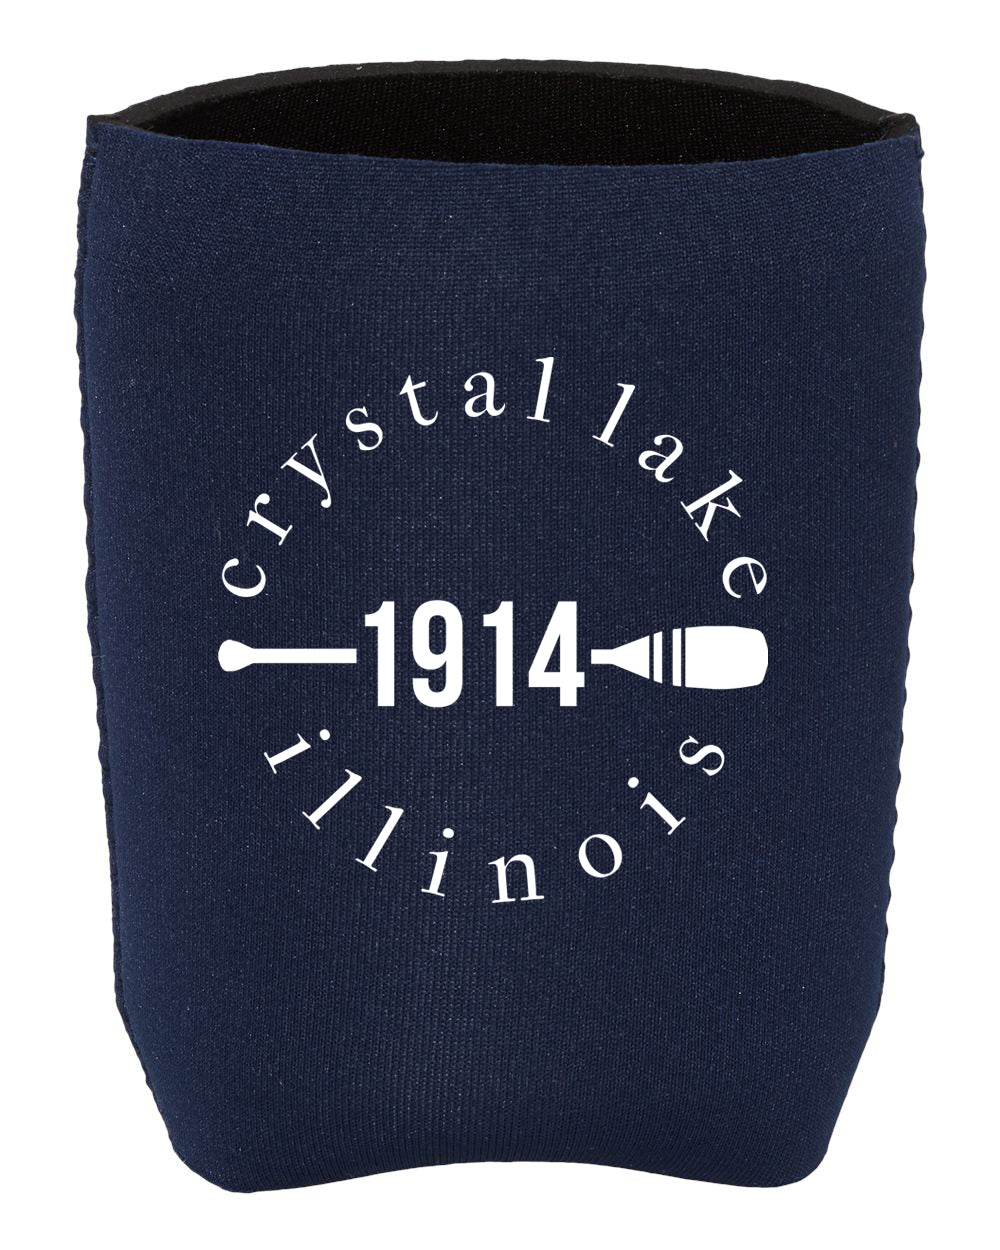 IN STOCK NOW! - Lake Life Crystal Lake 1914 Koozie - navy/white